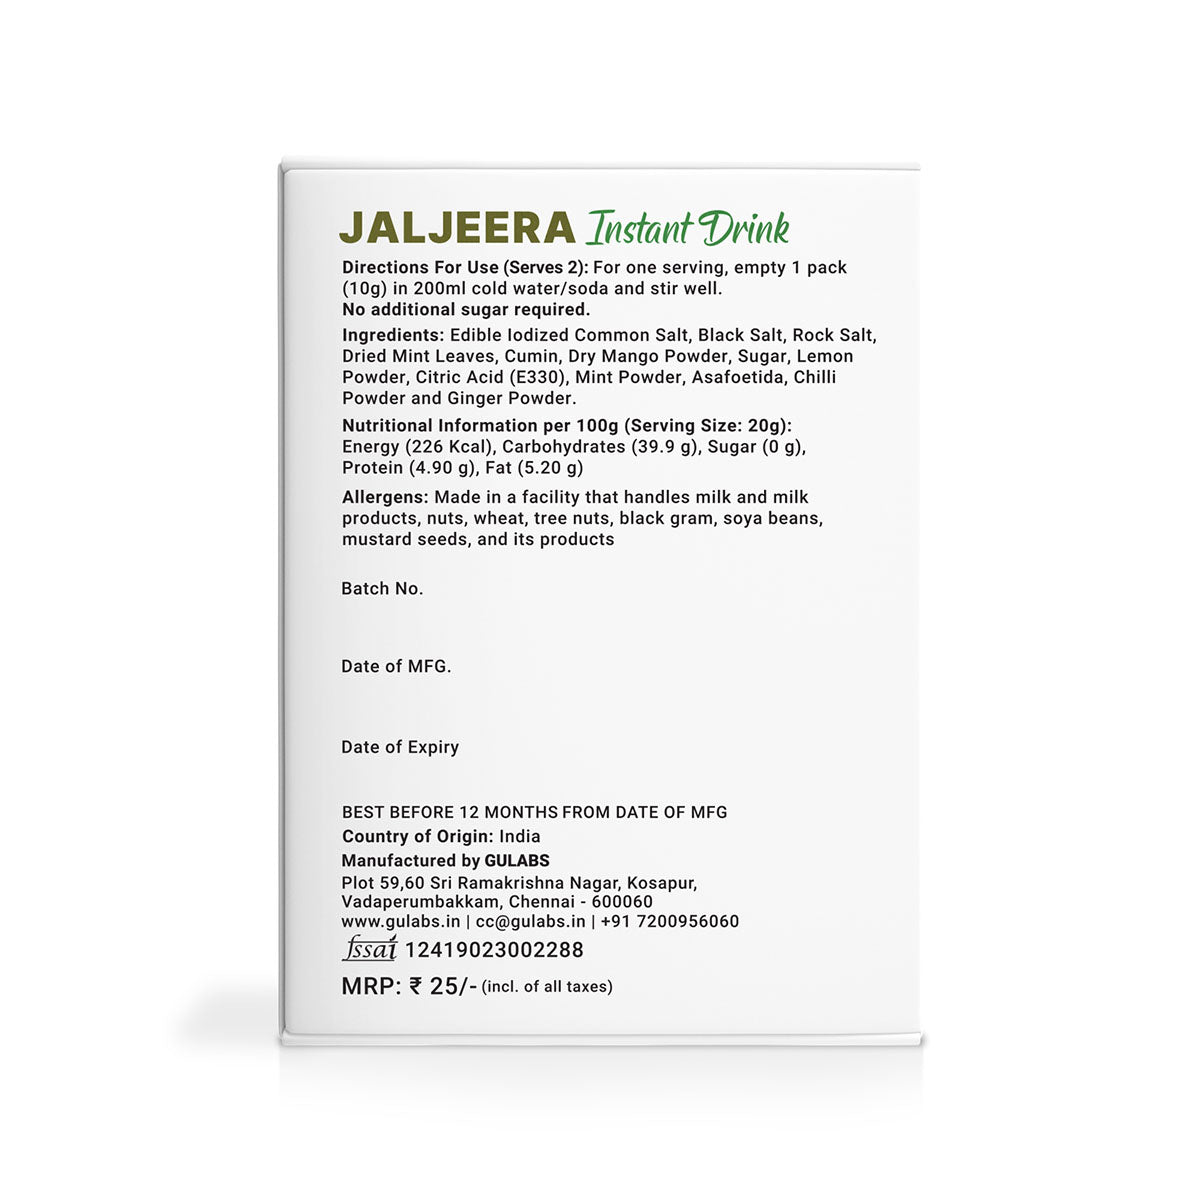 
                  
                    Gulabs Jaljeera Instant Drink (Pack of 5) - 20g
                  
                